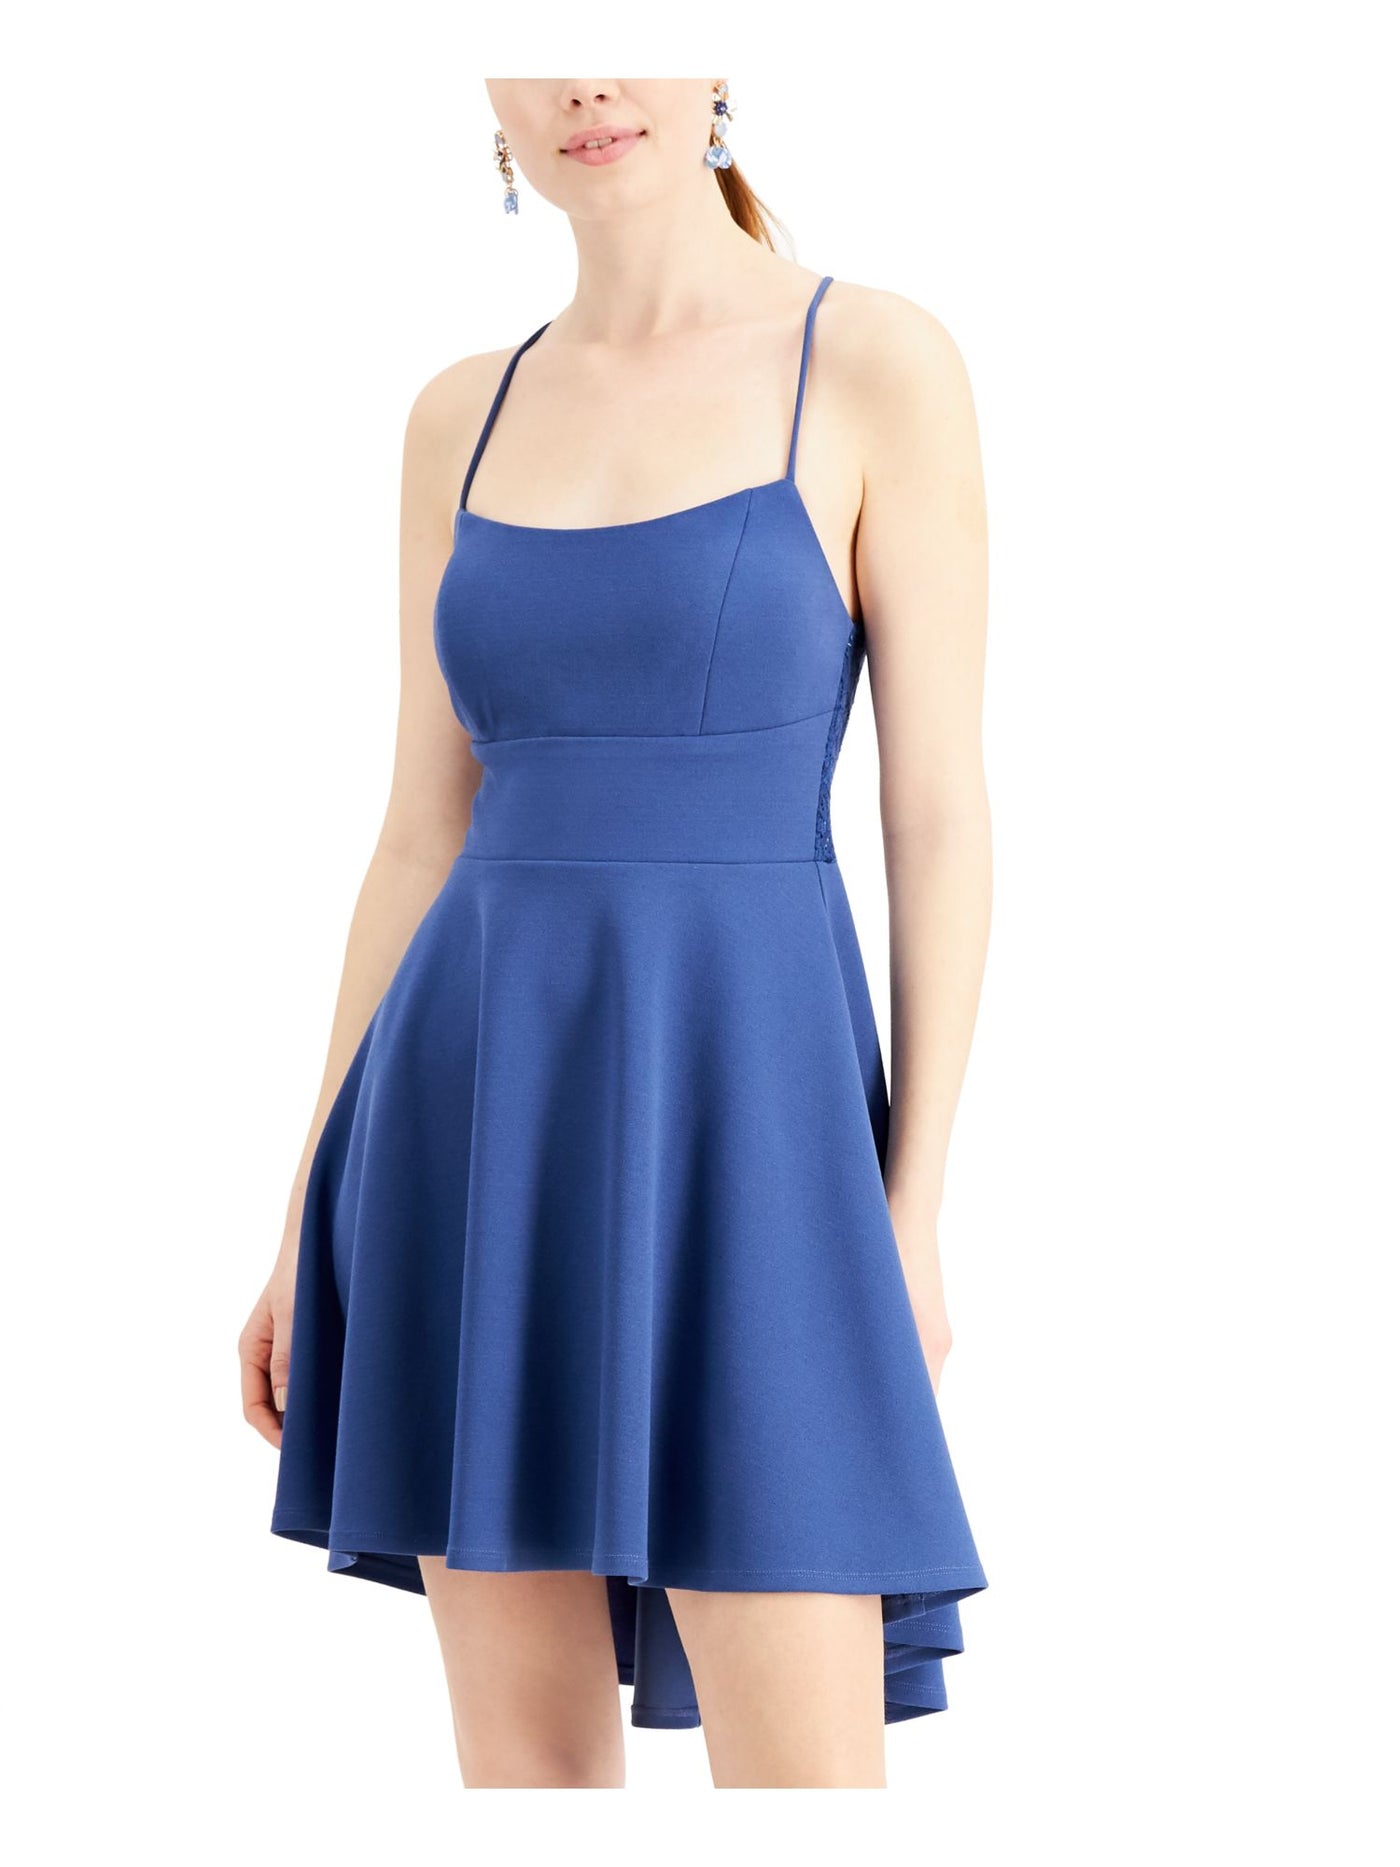 CITY STUDIO Womens Blue Lace Zippered Hi-lo Spaghetti Strap Scoop Neck Mini Party Fit + Flare Dress Juniors 11